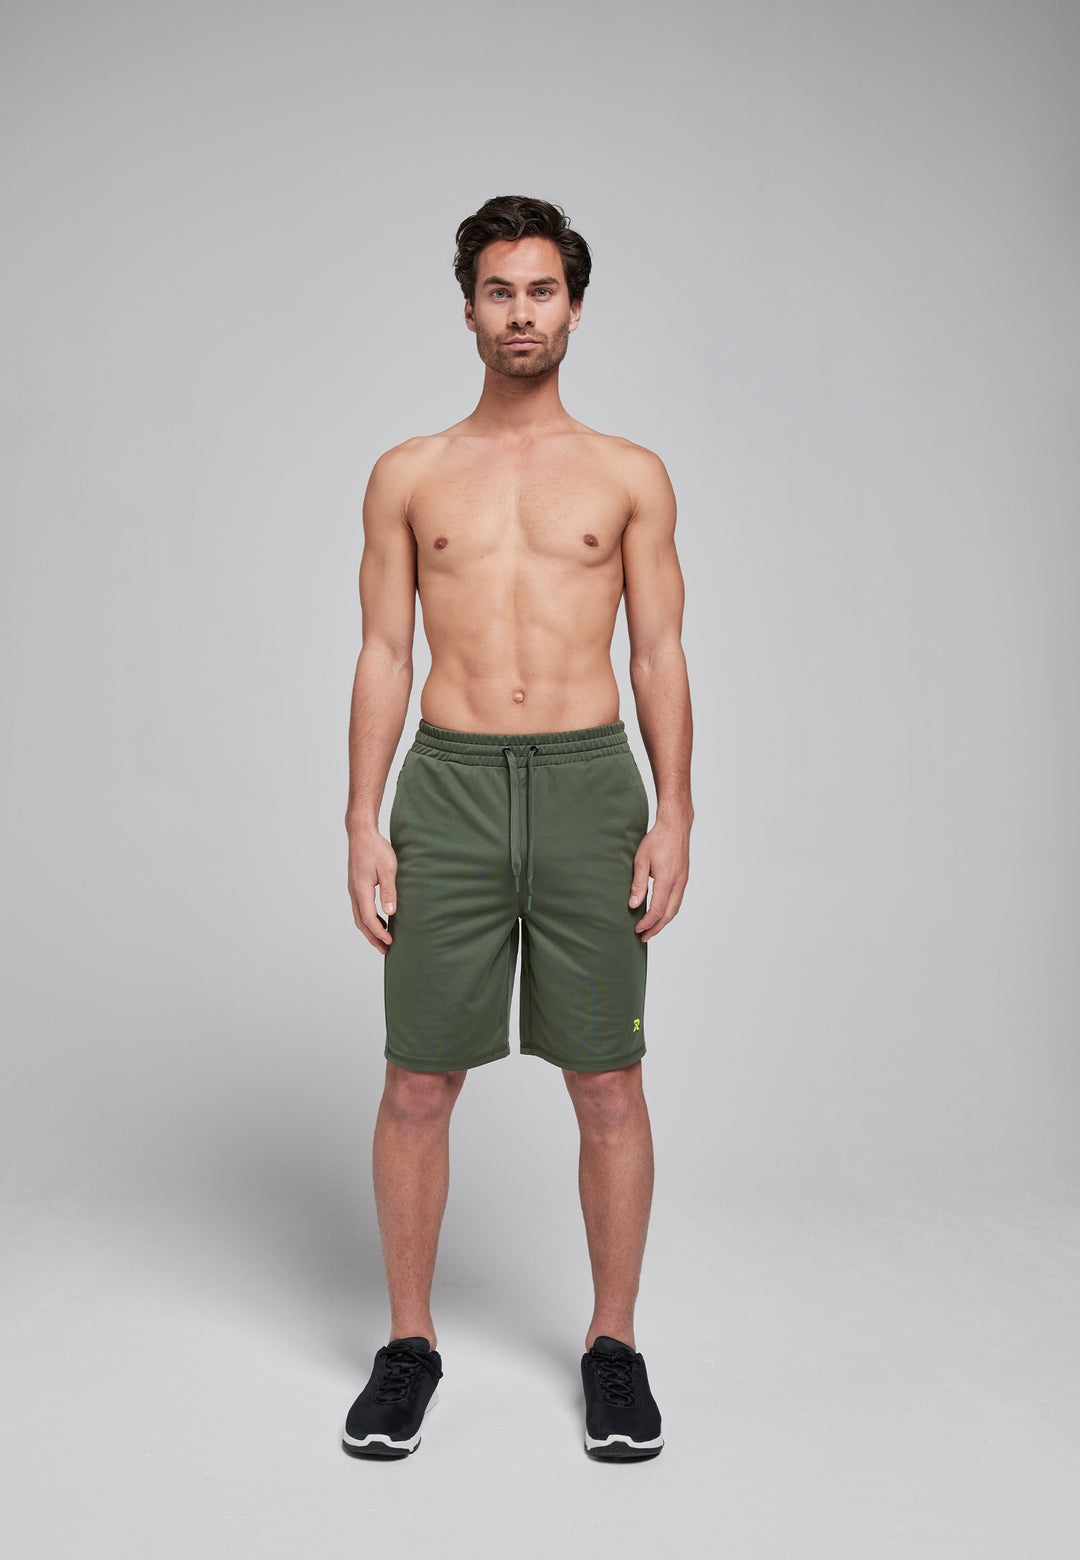 Men's sports shorts - sustainable